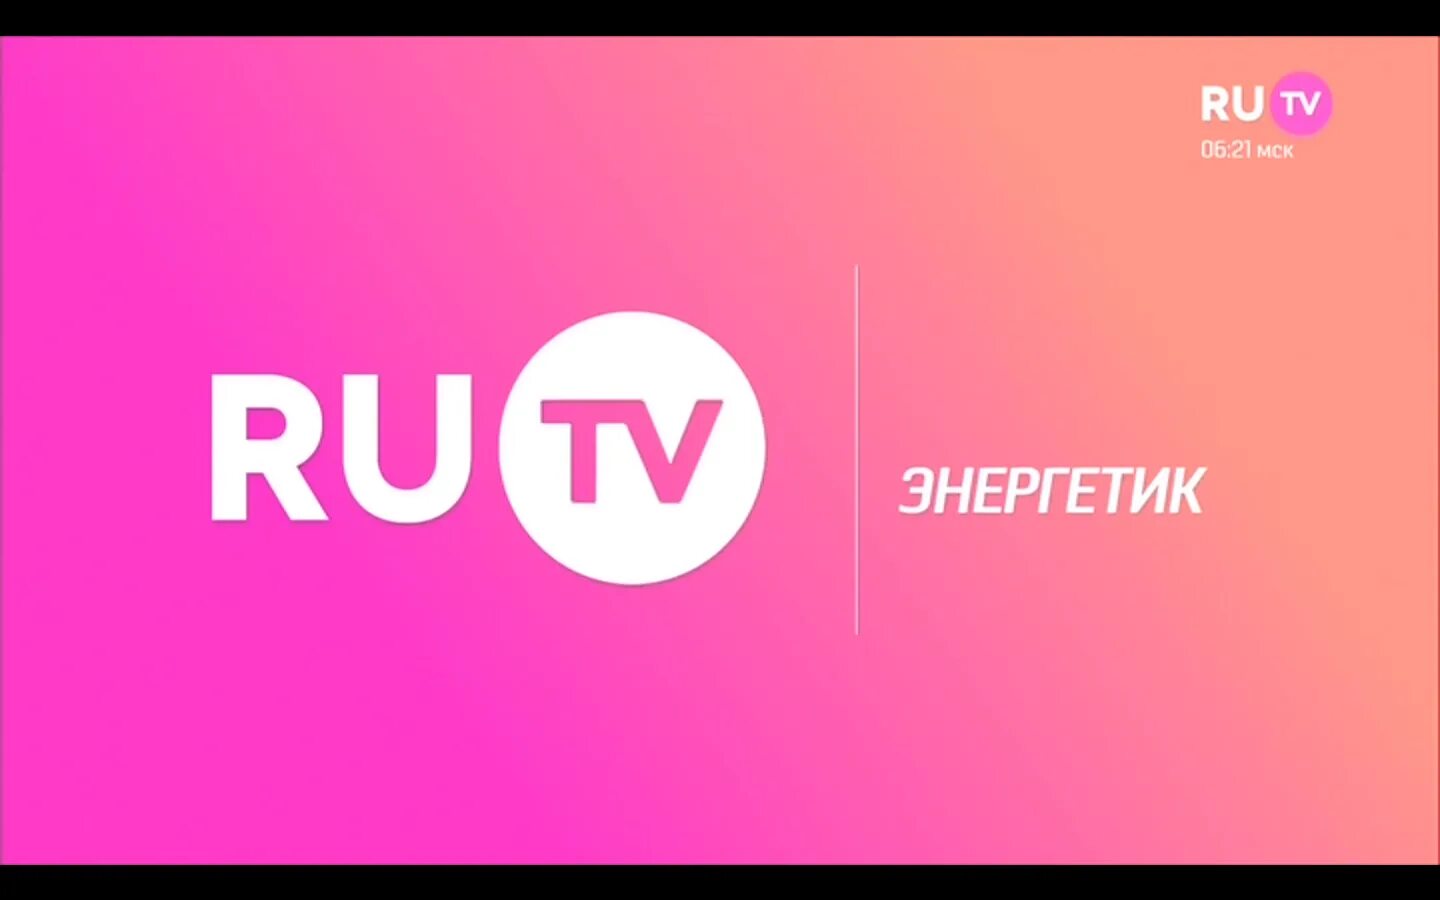 Ру ТВ. Ru TV логотип. Логотип канала ру ТВ. Ру ТВ заставка. Включи музыку тв